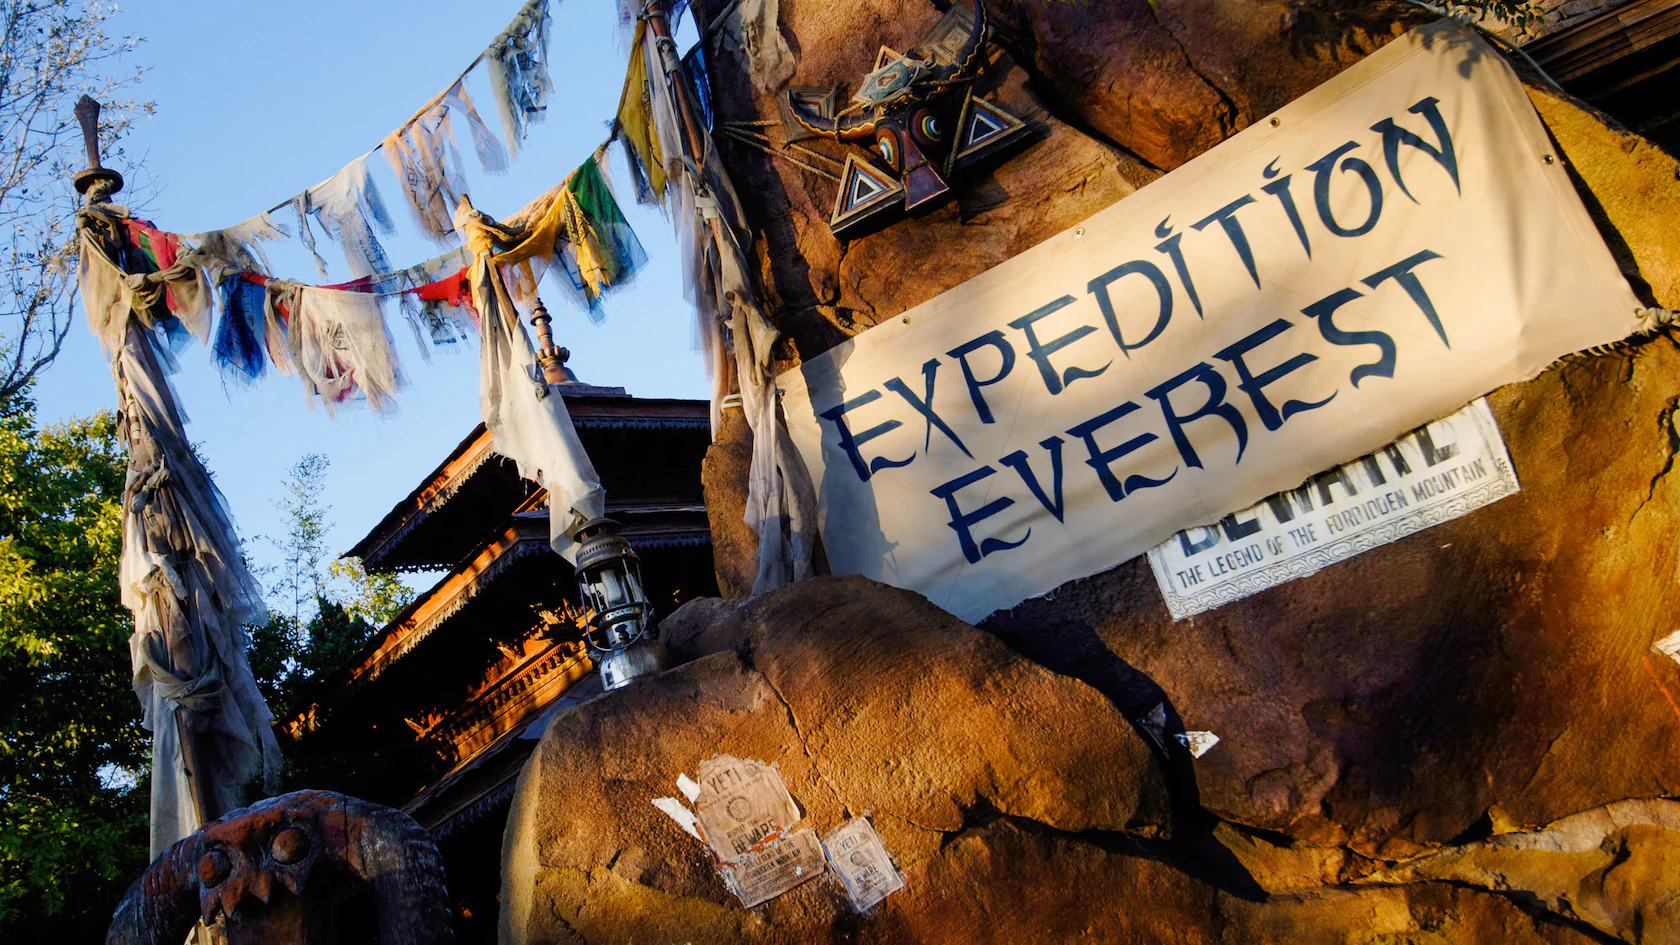 Expedition everest, Disney